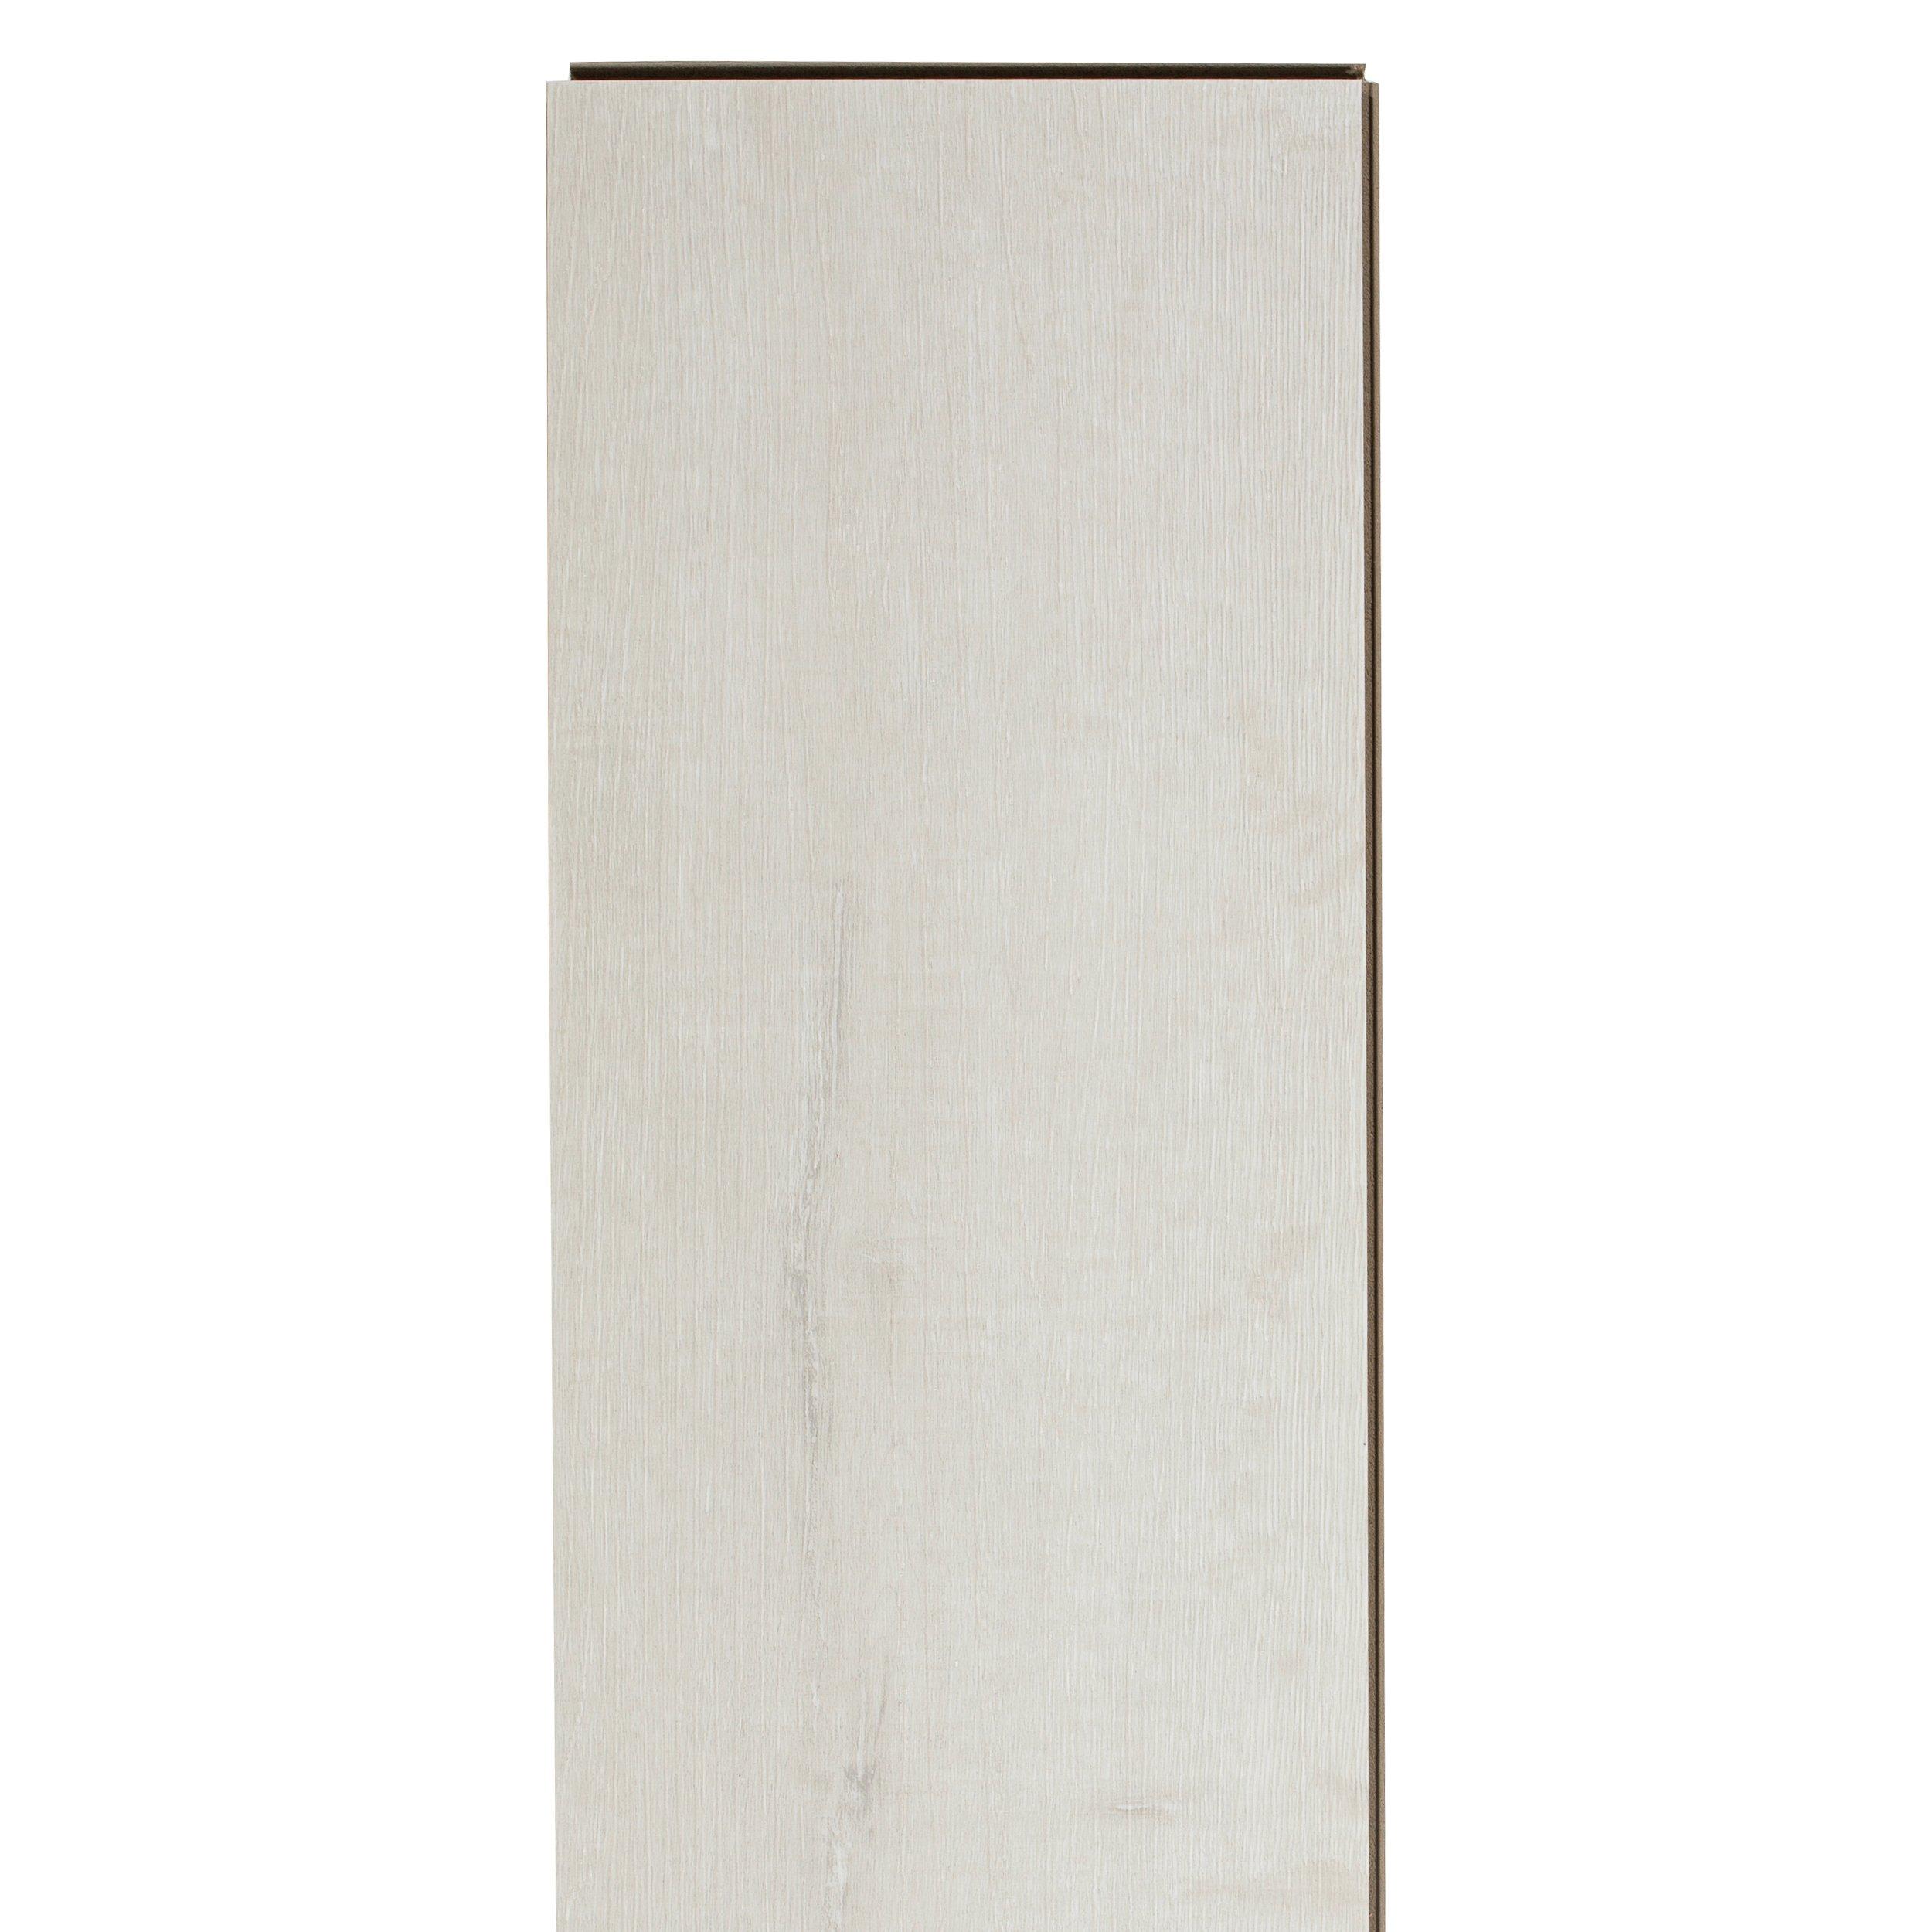 nucore flooring vinyl plank core cork luxury waterproof floor rigid tile decor glacier